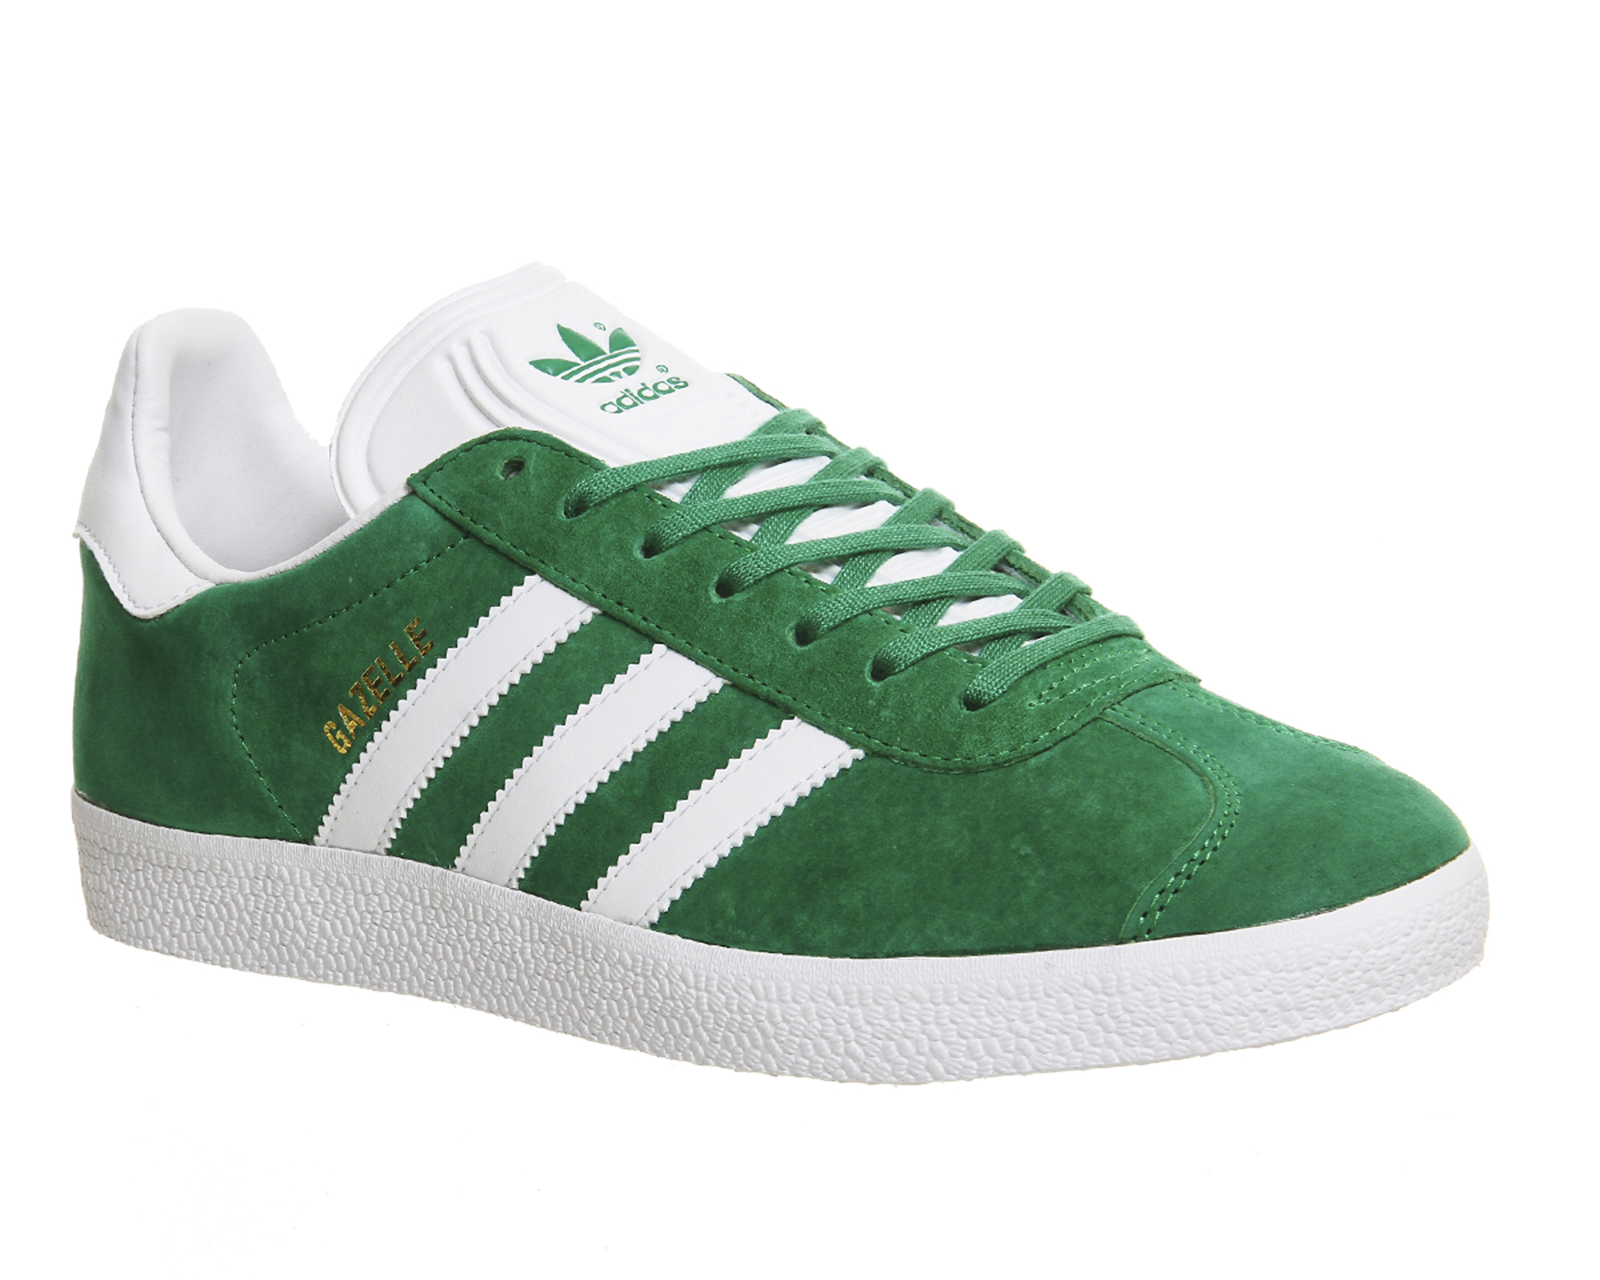 adidas Gazelle Green White - His trainers